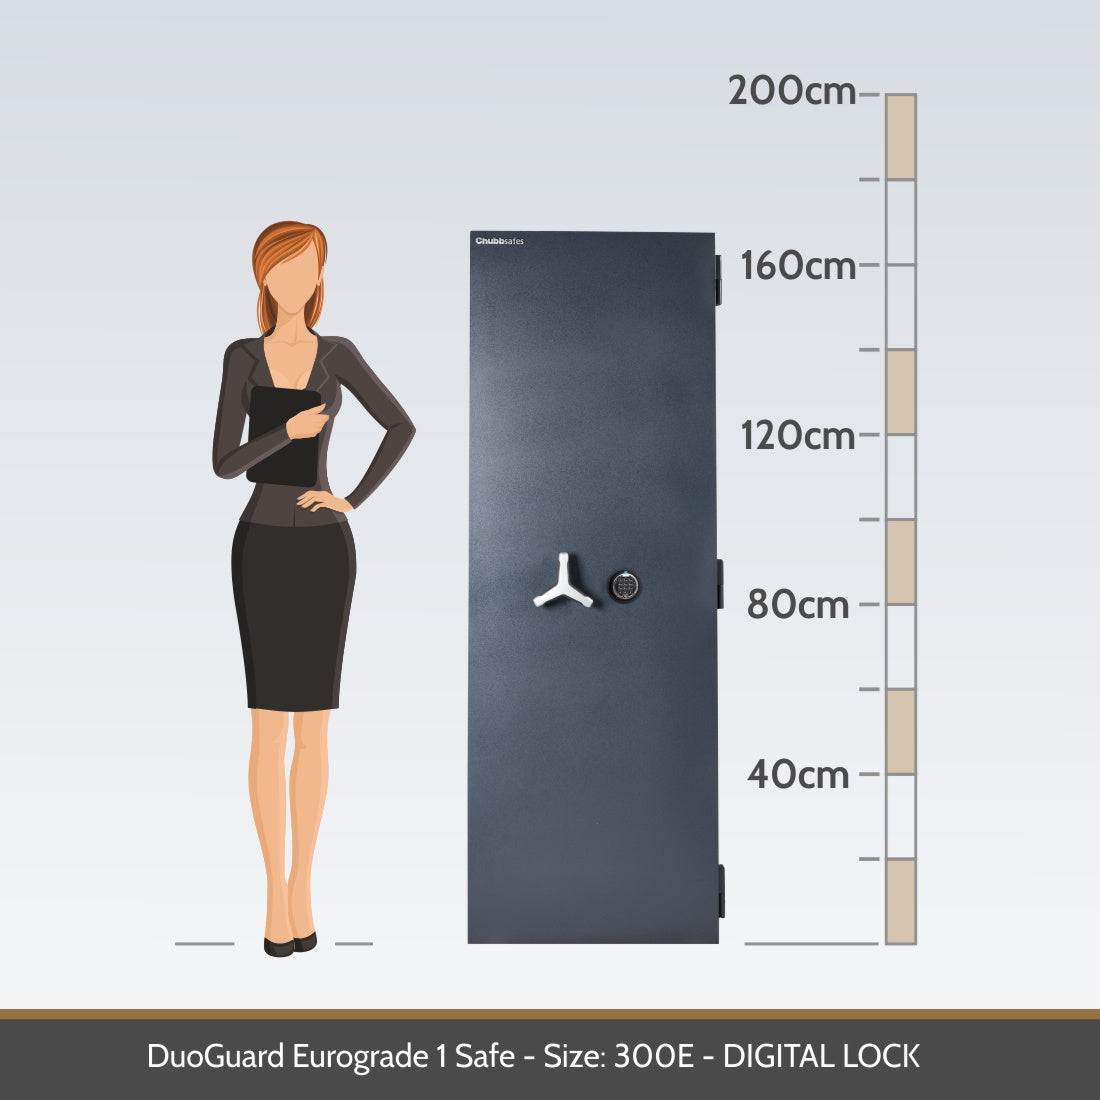 Chubbsafes, DuoGuard Eurograde 1 Safe - Size: 300E - DIGITAL LOCK